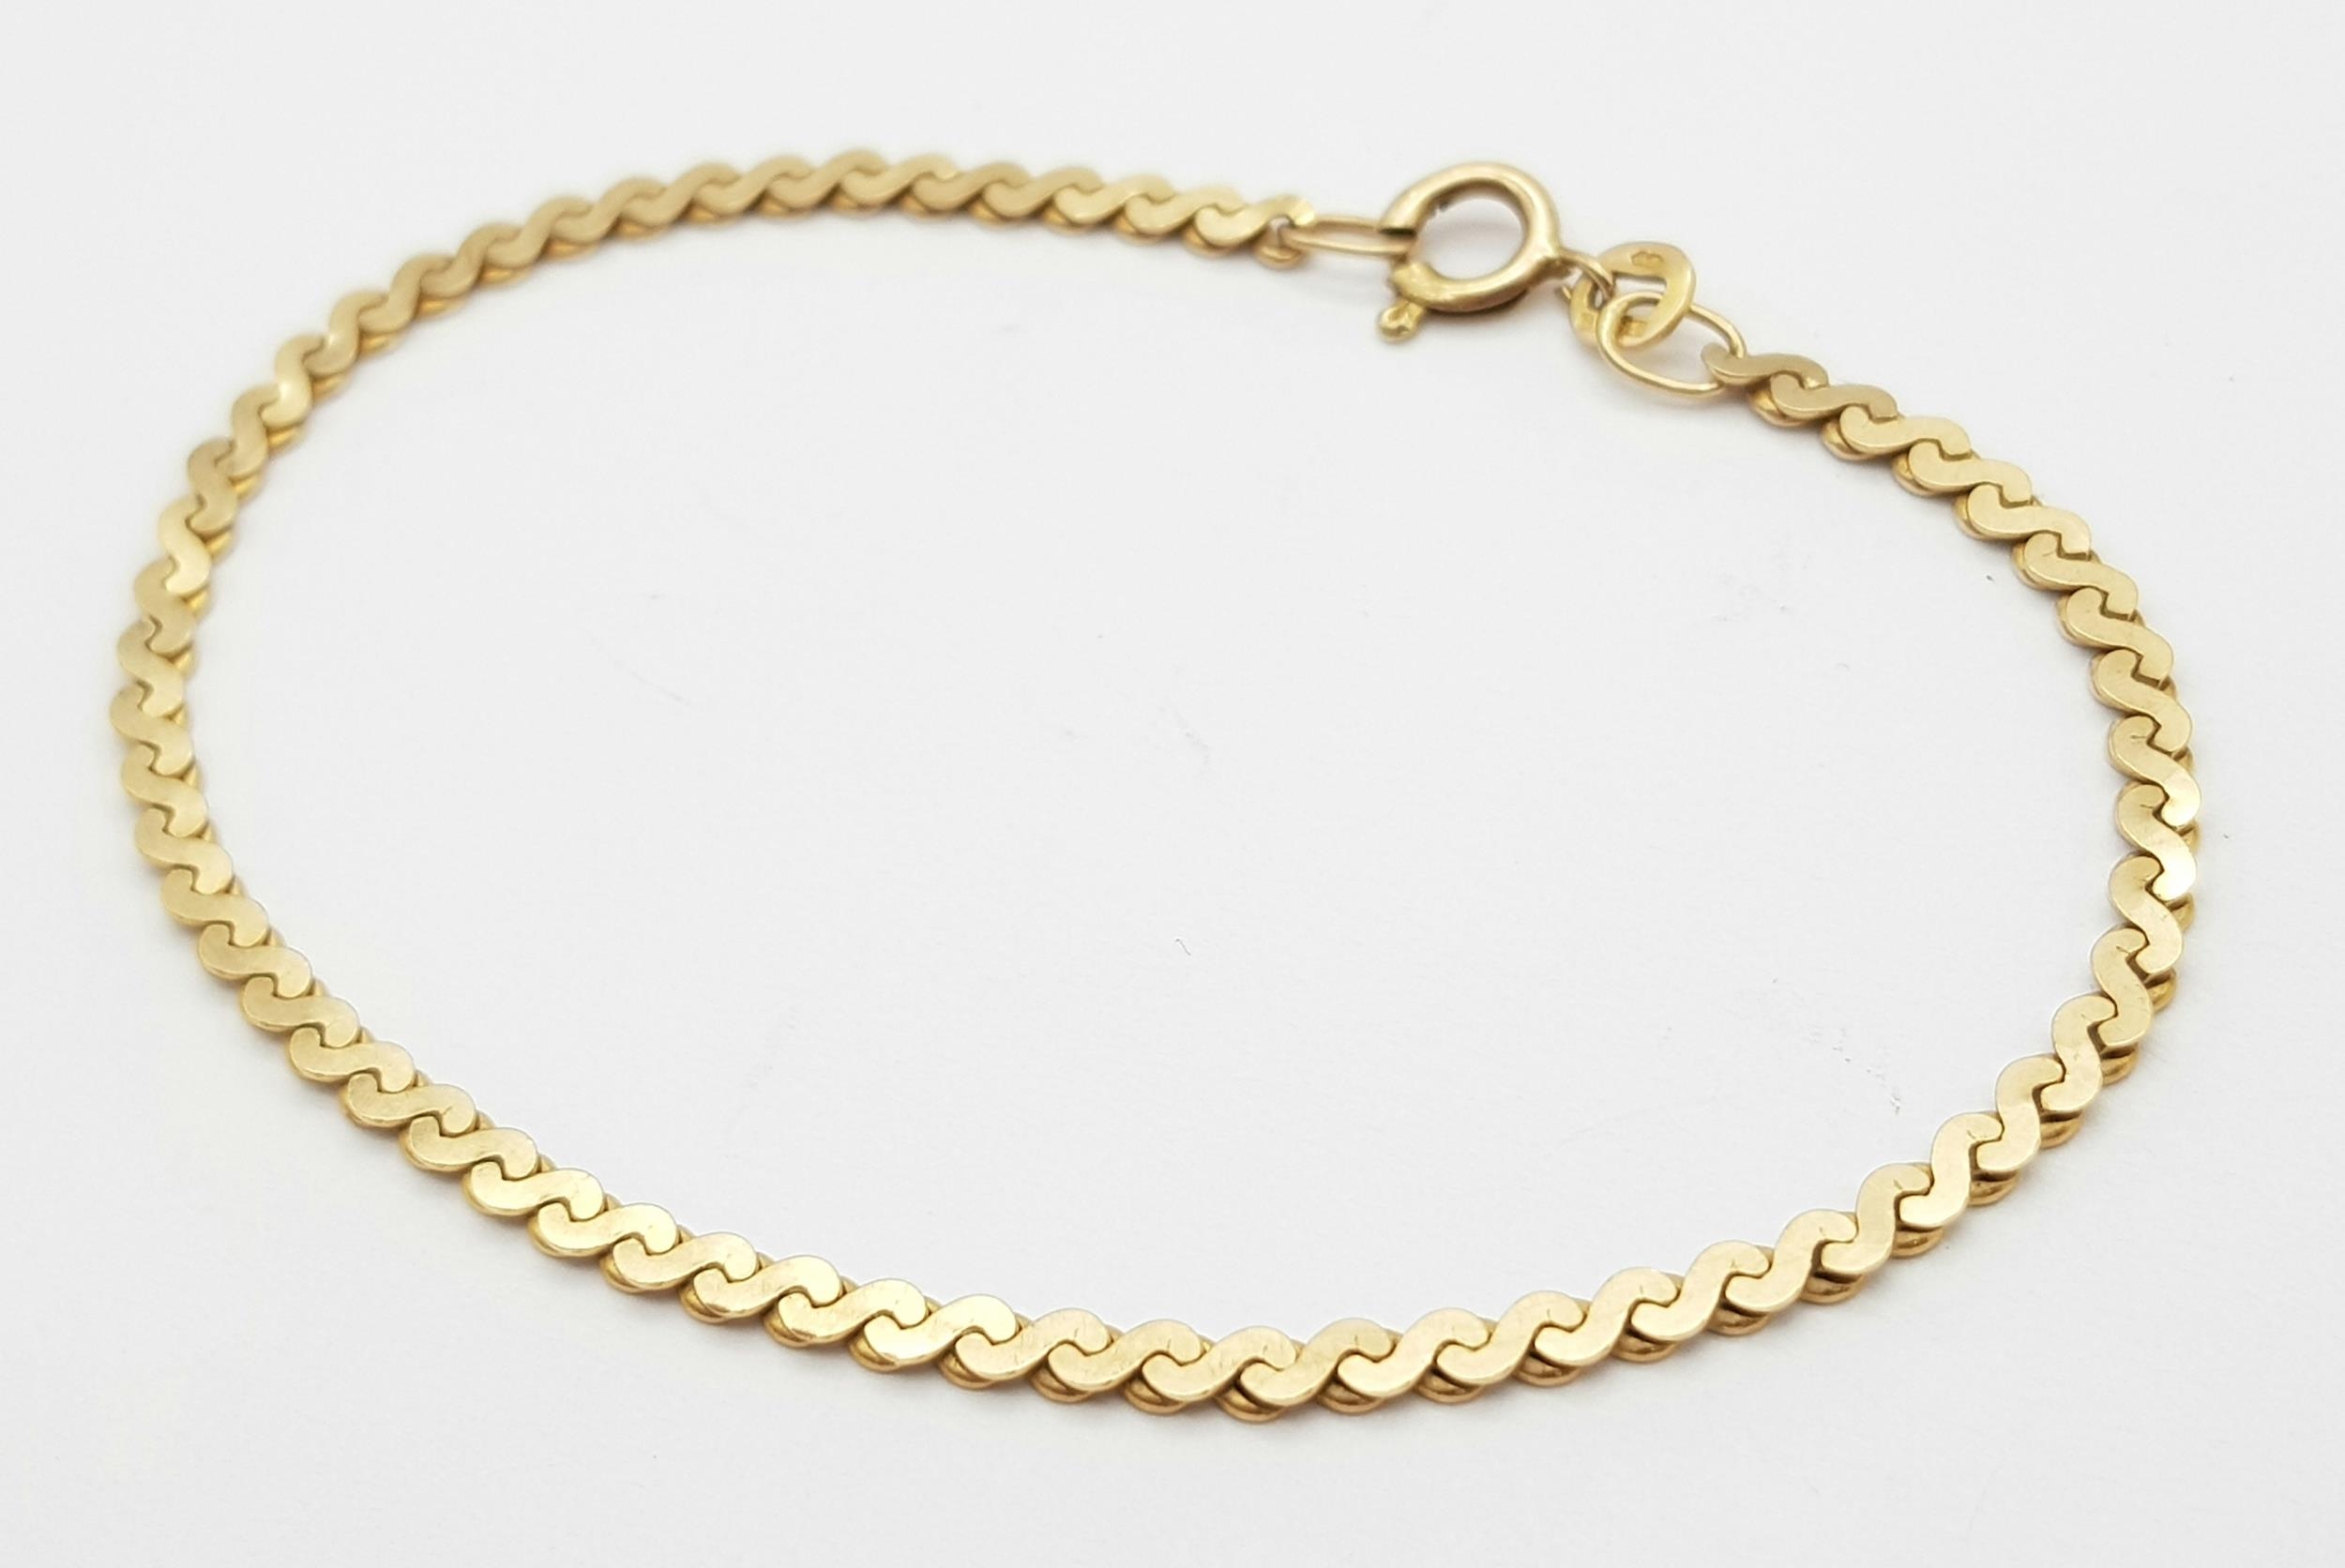 A 9K Yellow Gold Serpentine Link Bracelet. 17cm. 3.9g weight.